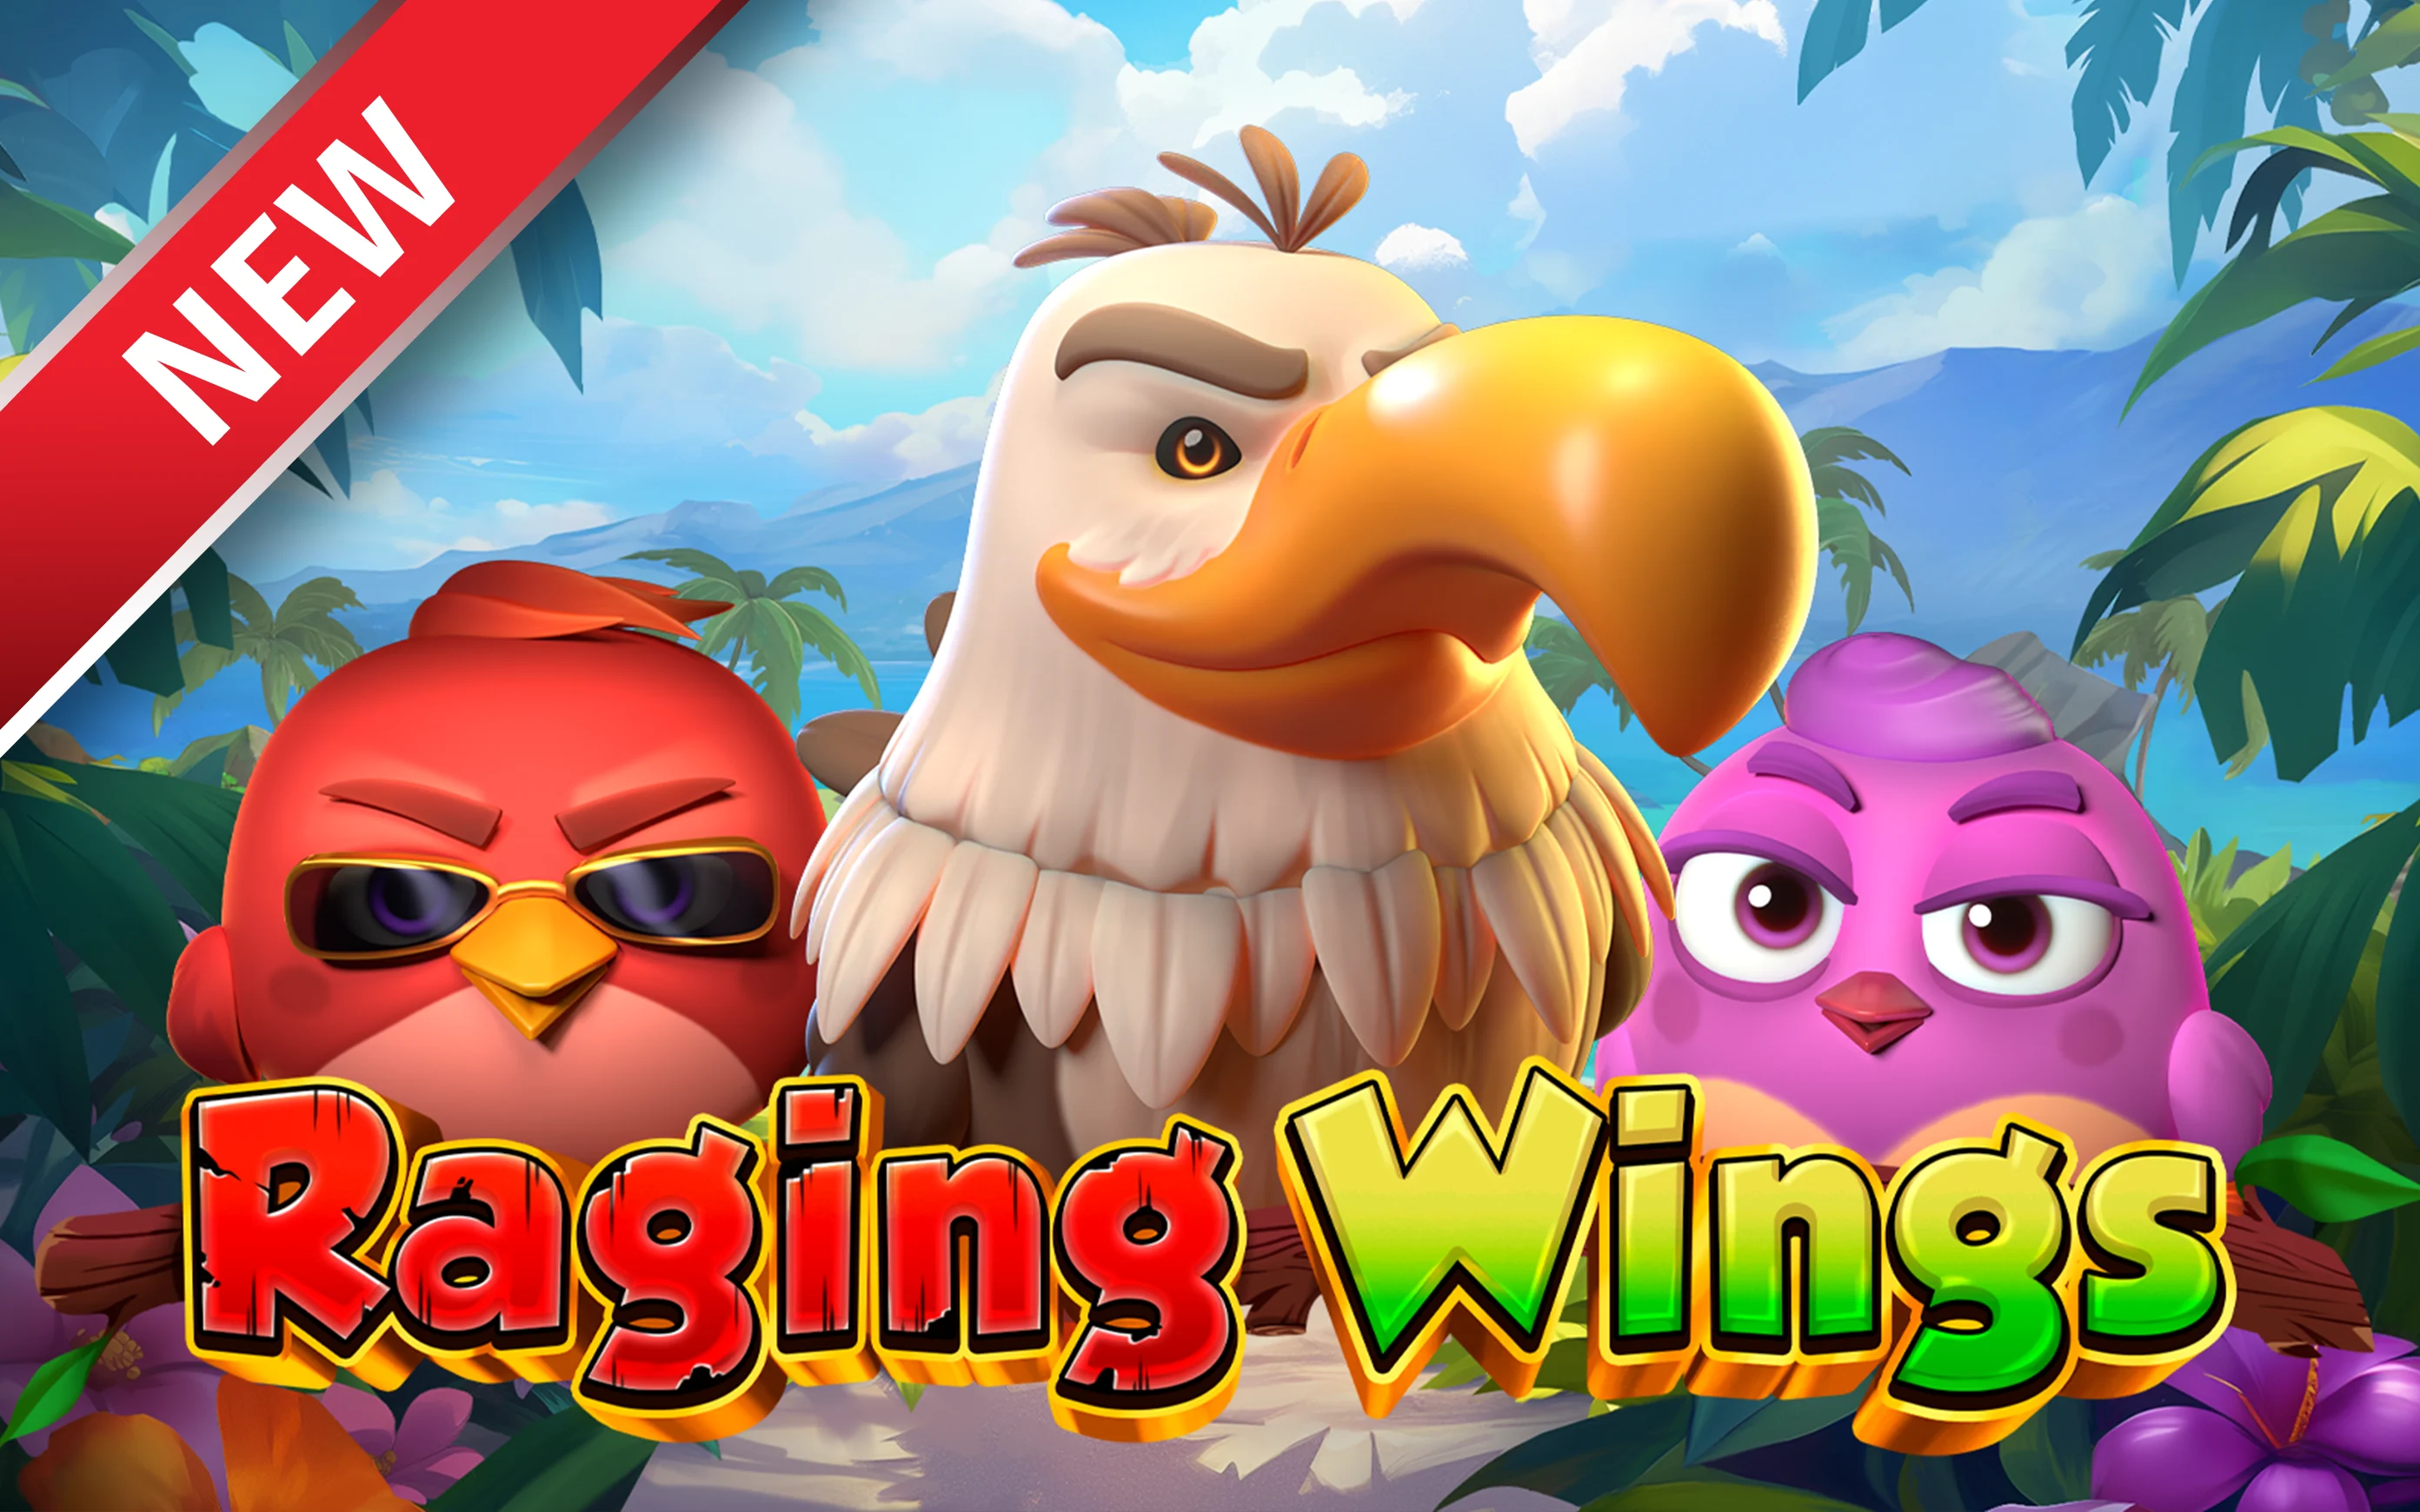 Play Raging Wings on Starcasino.be online casino